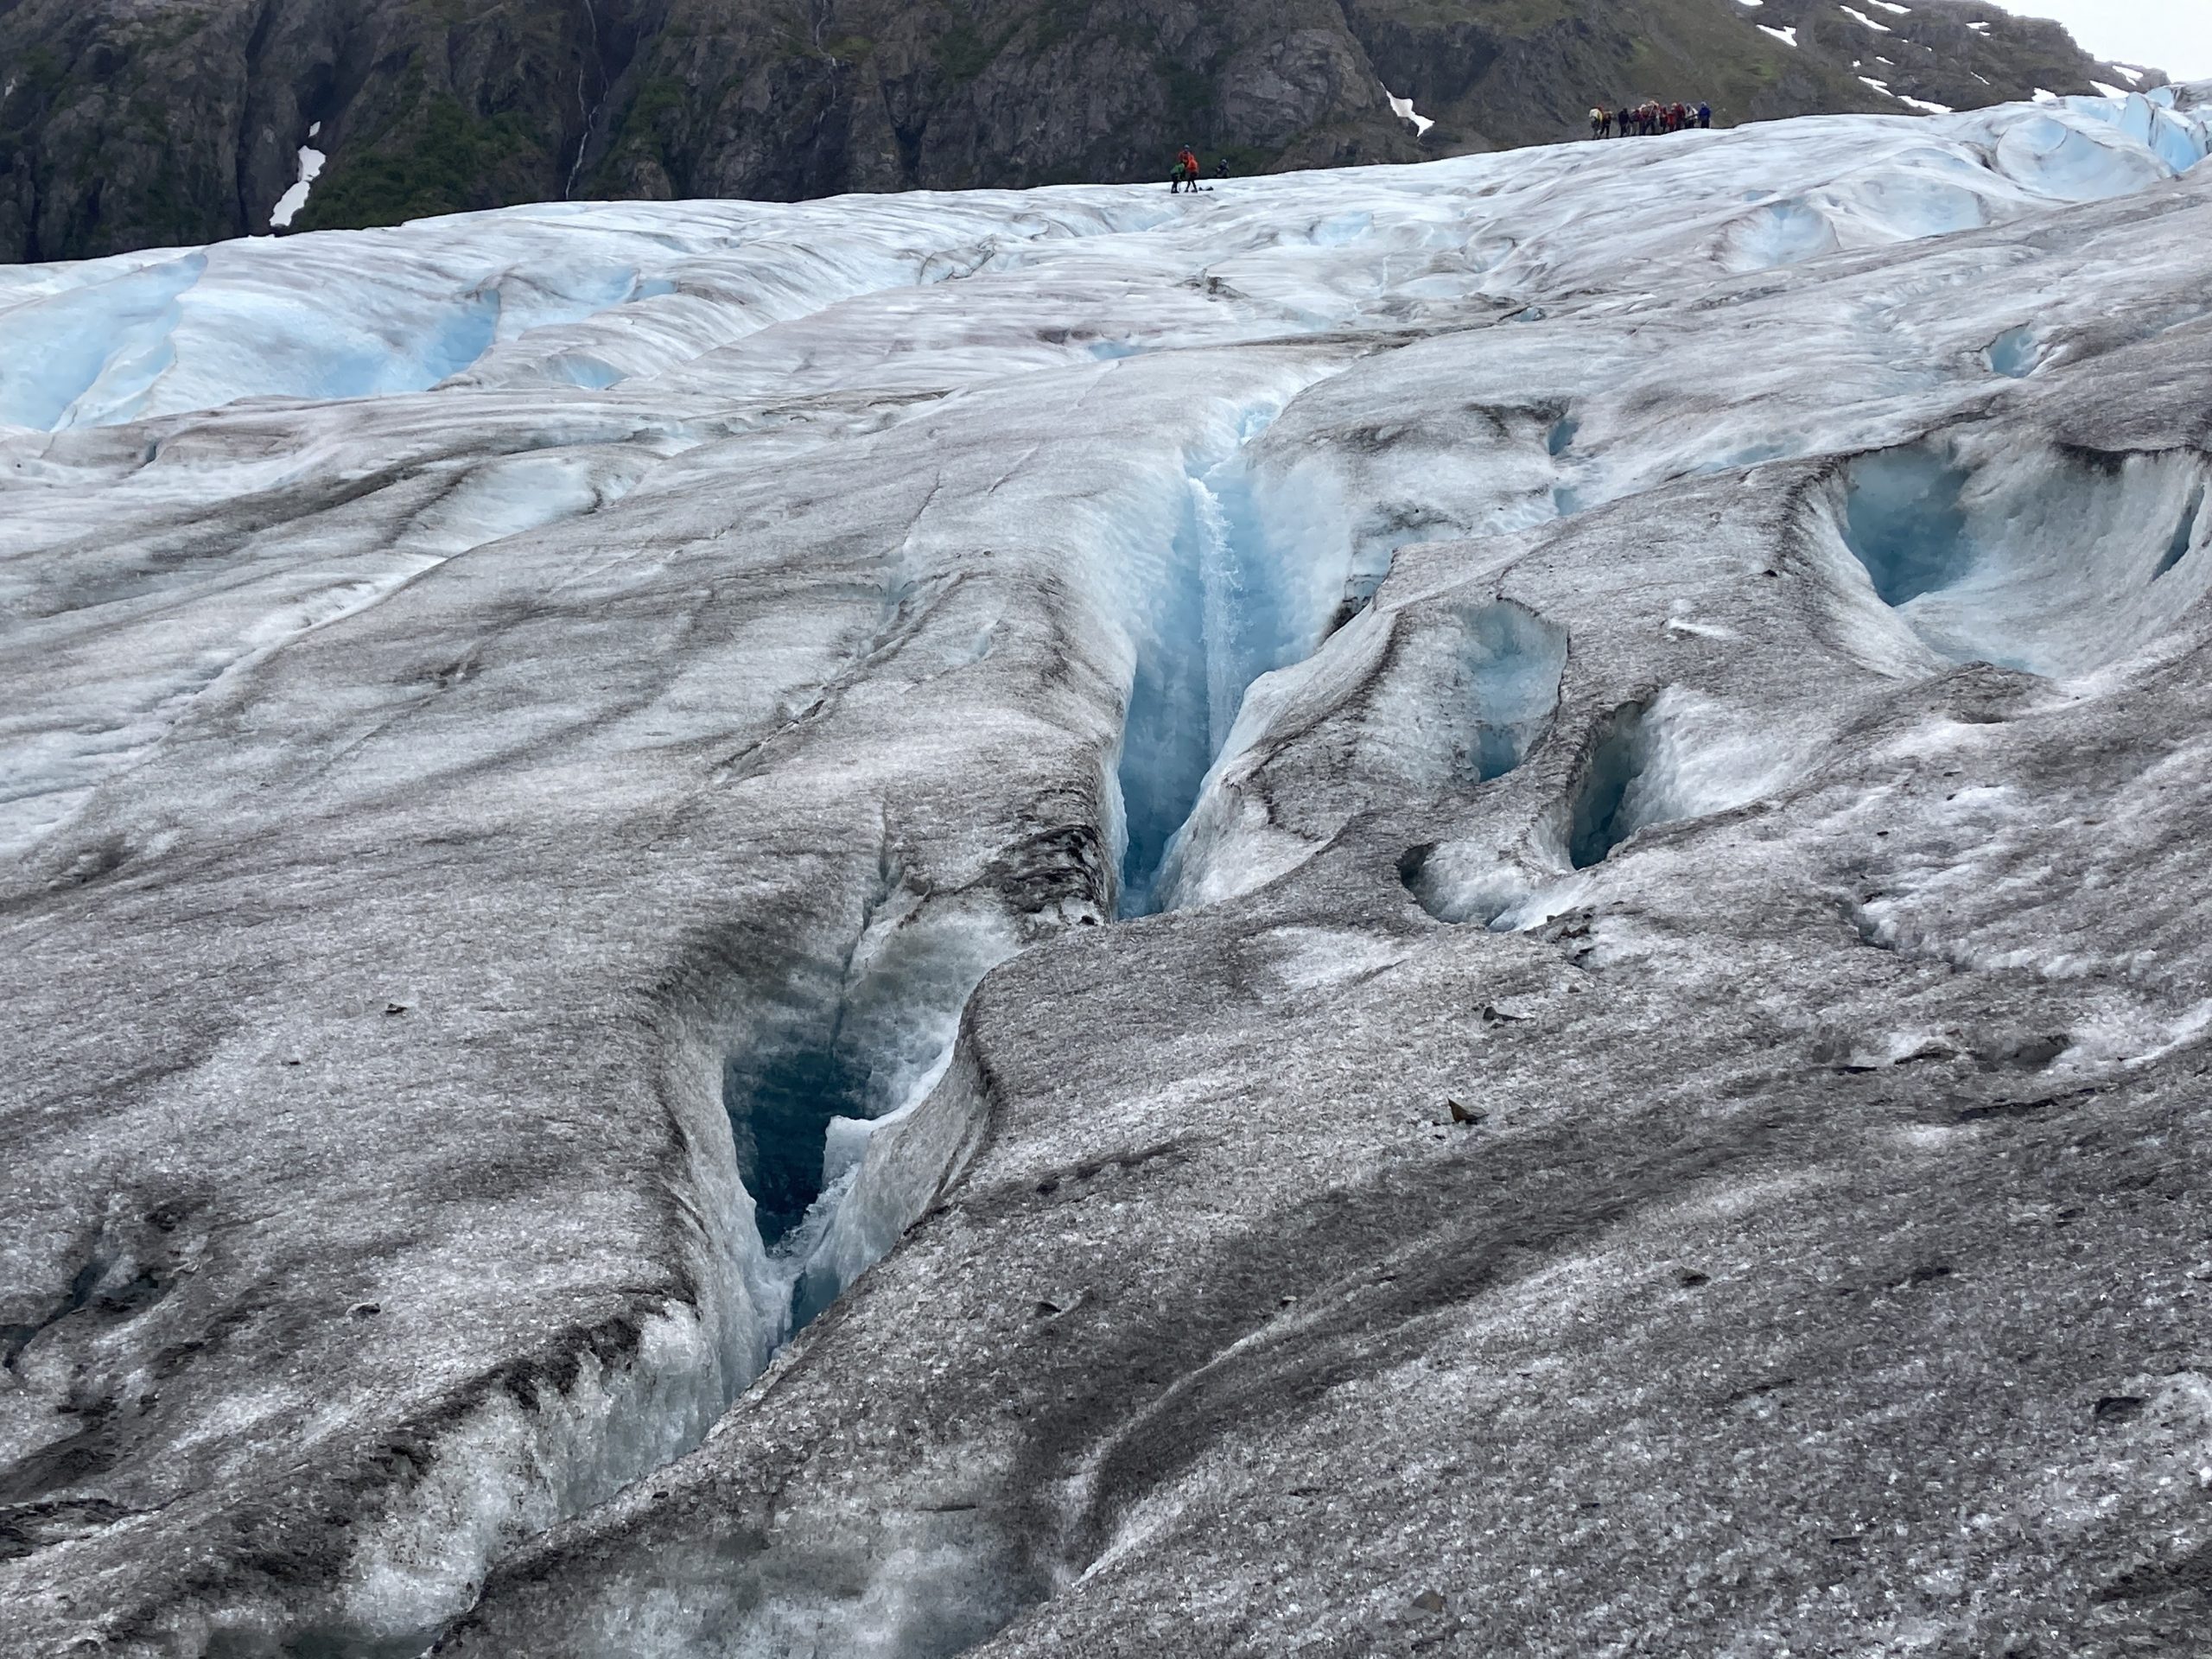 TRIP REPORT: 7/1/22 Exit Glacier Ice Hiking Adventure